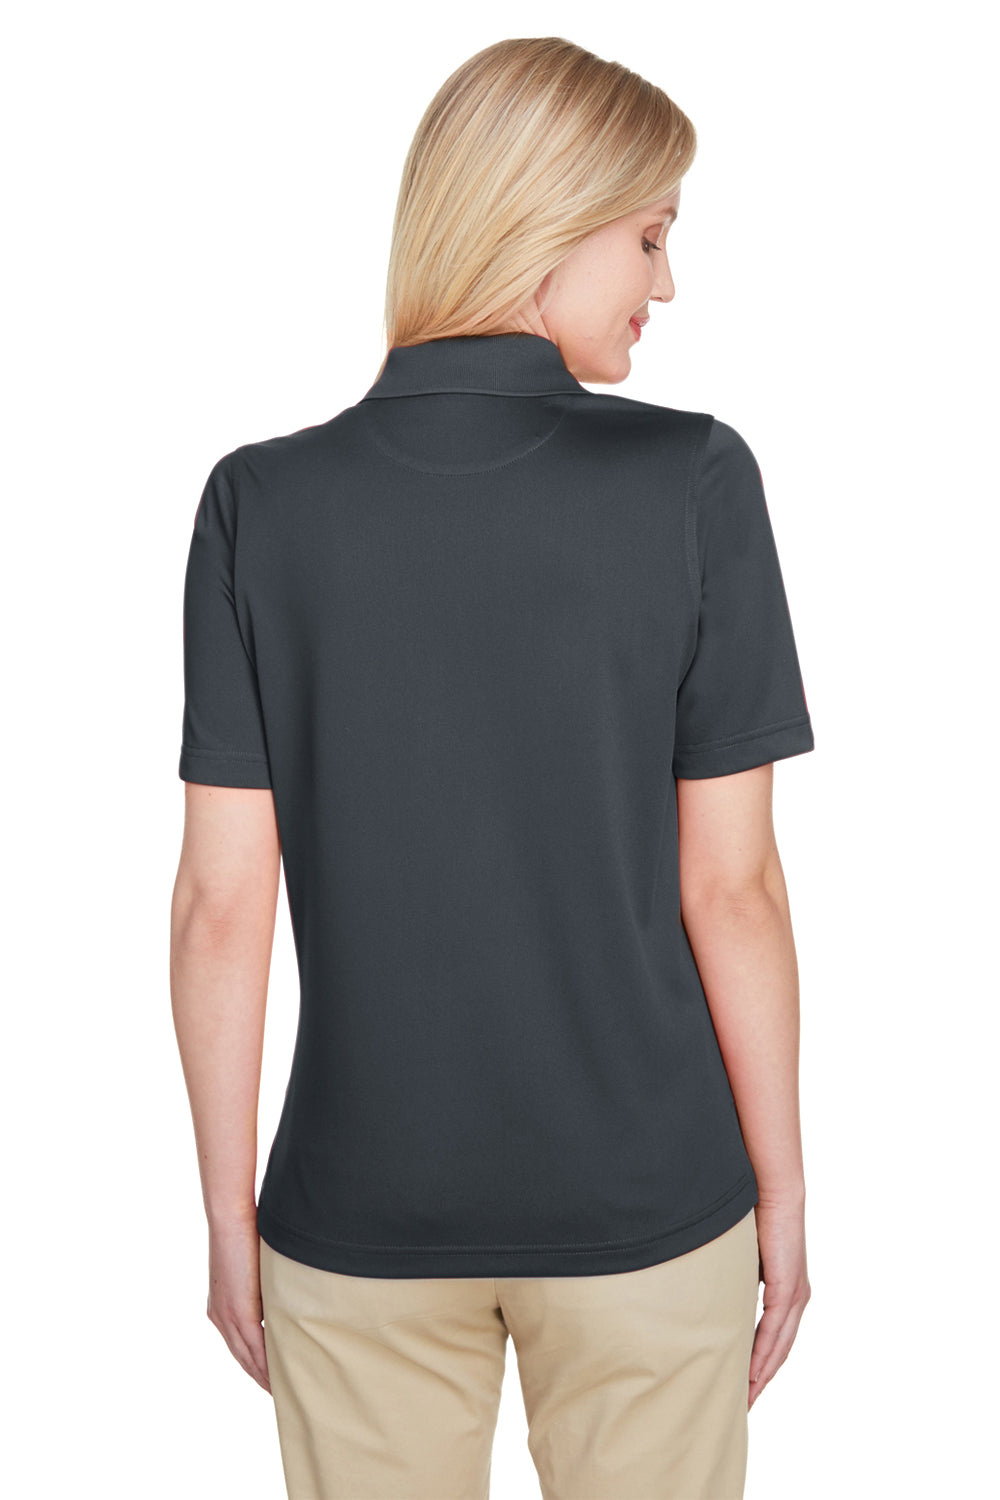 Harriton M348W Womens Advantage Performance Moisture Wicking Short Sleeve Polo Shirt Charcoal Grey Back